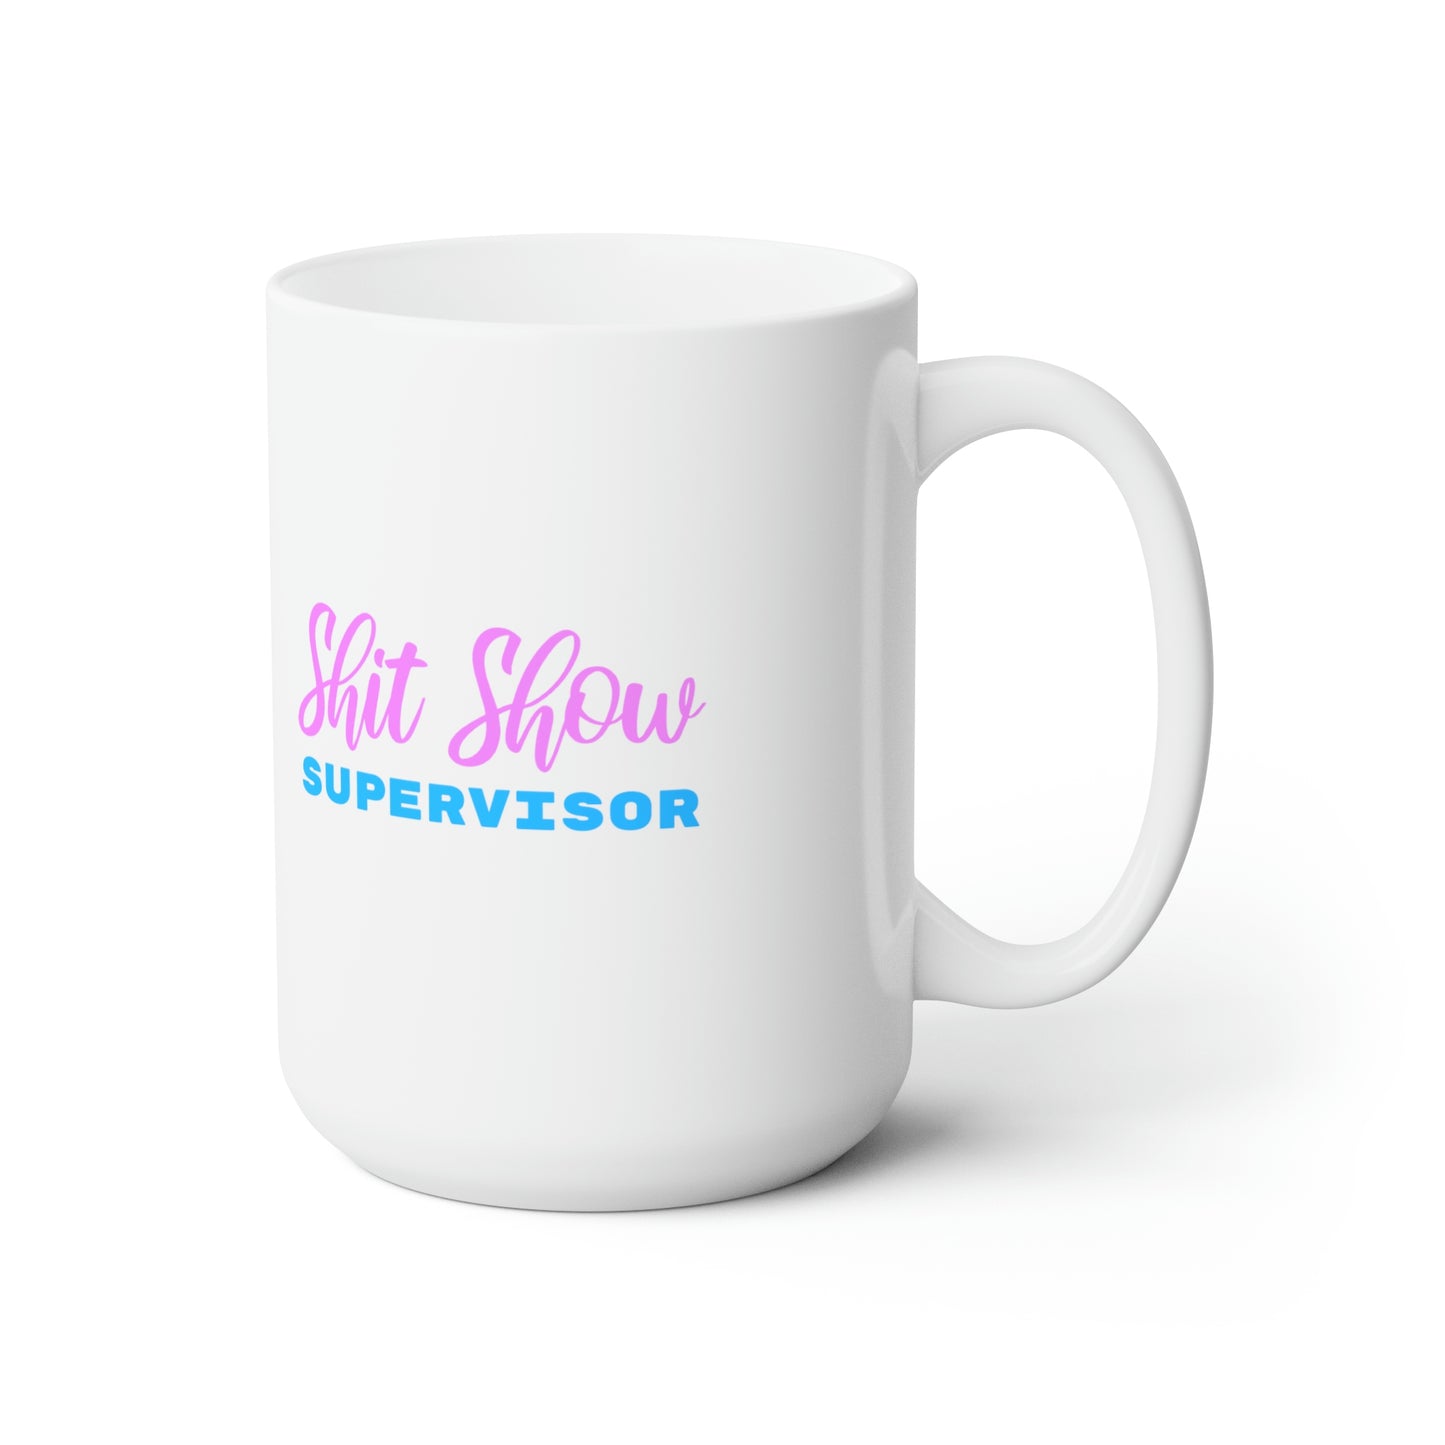 Shit Show Supervisor 15oz Mug